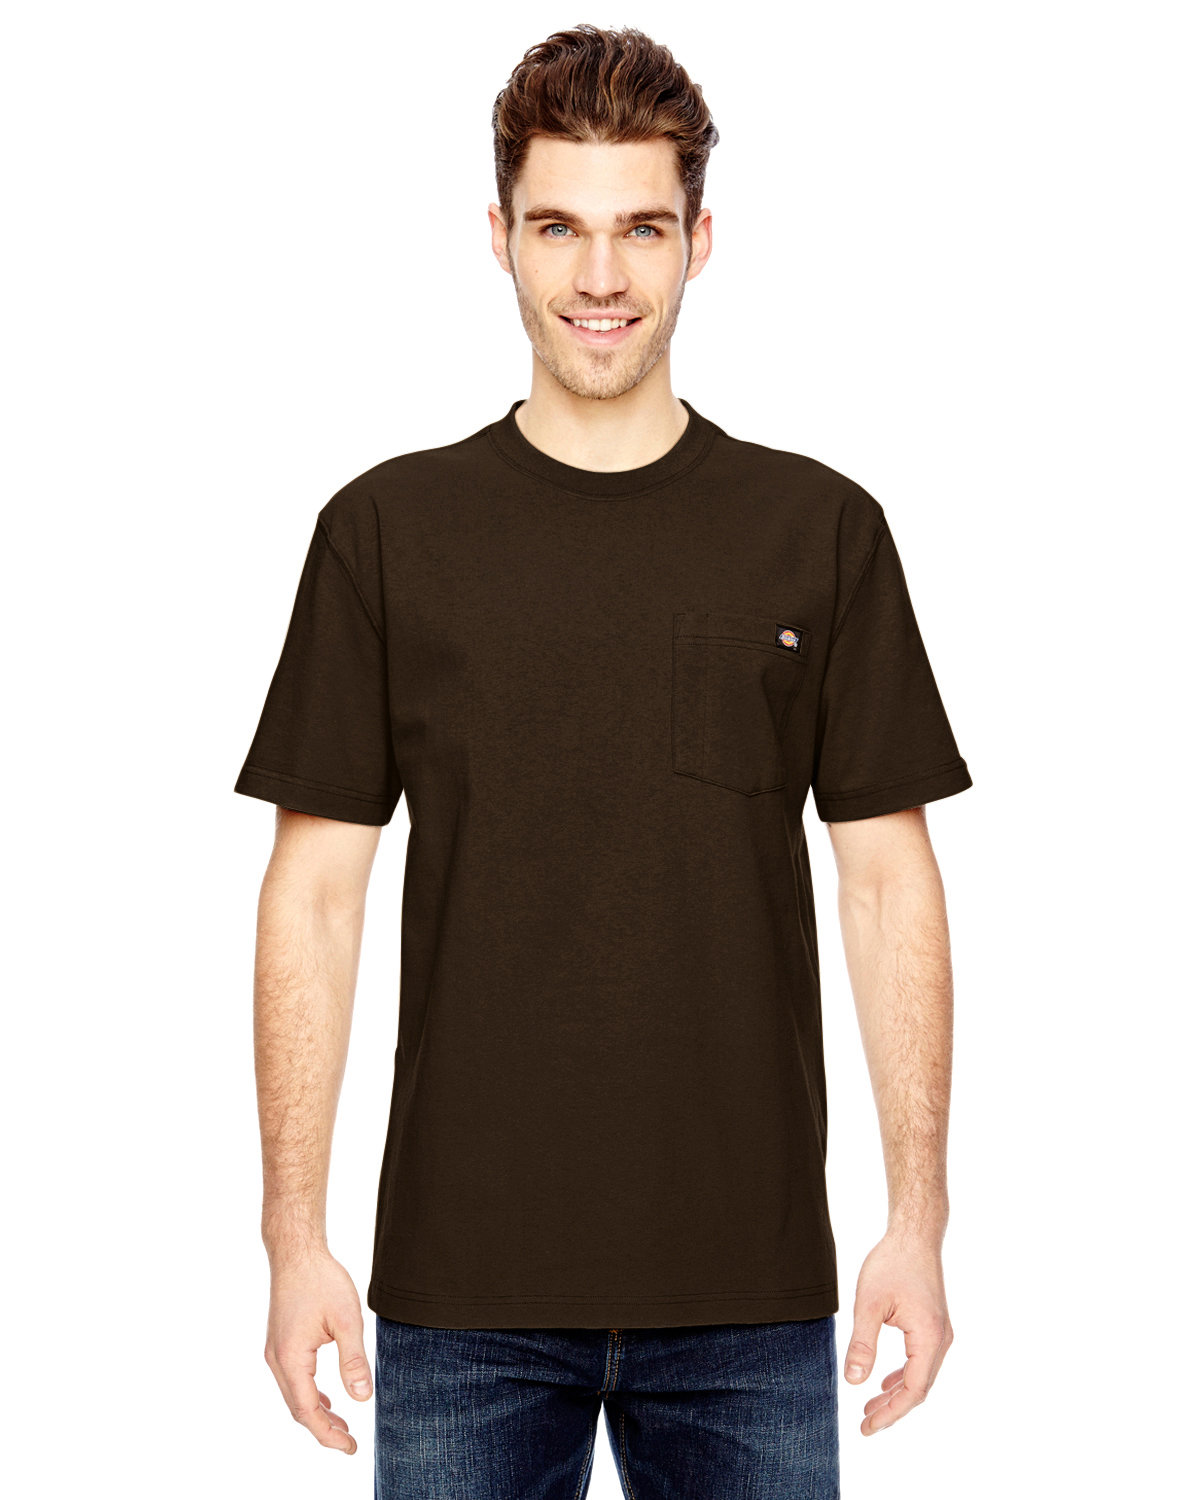 Dickies Unisex Short-Sleeve Heavyweight T-Shirt CHOCOLATE BROWN 